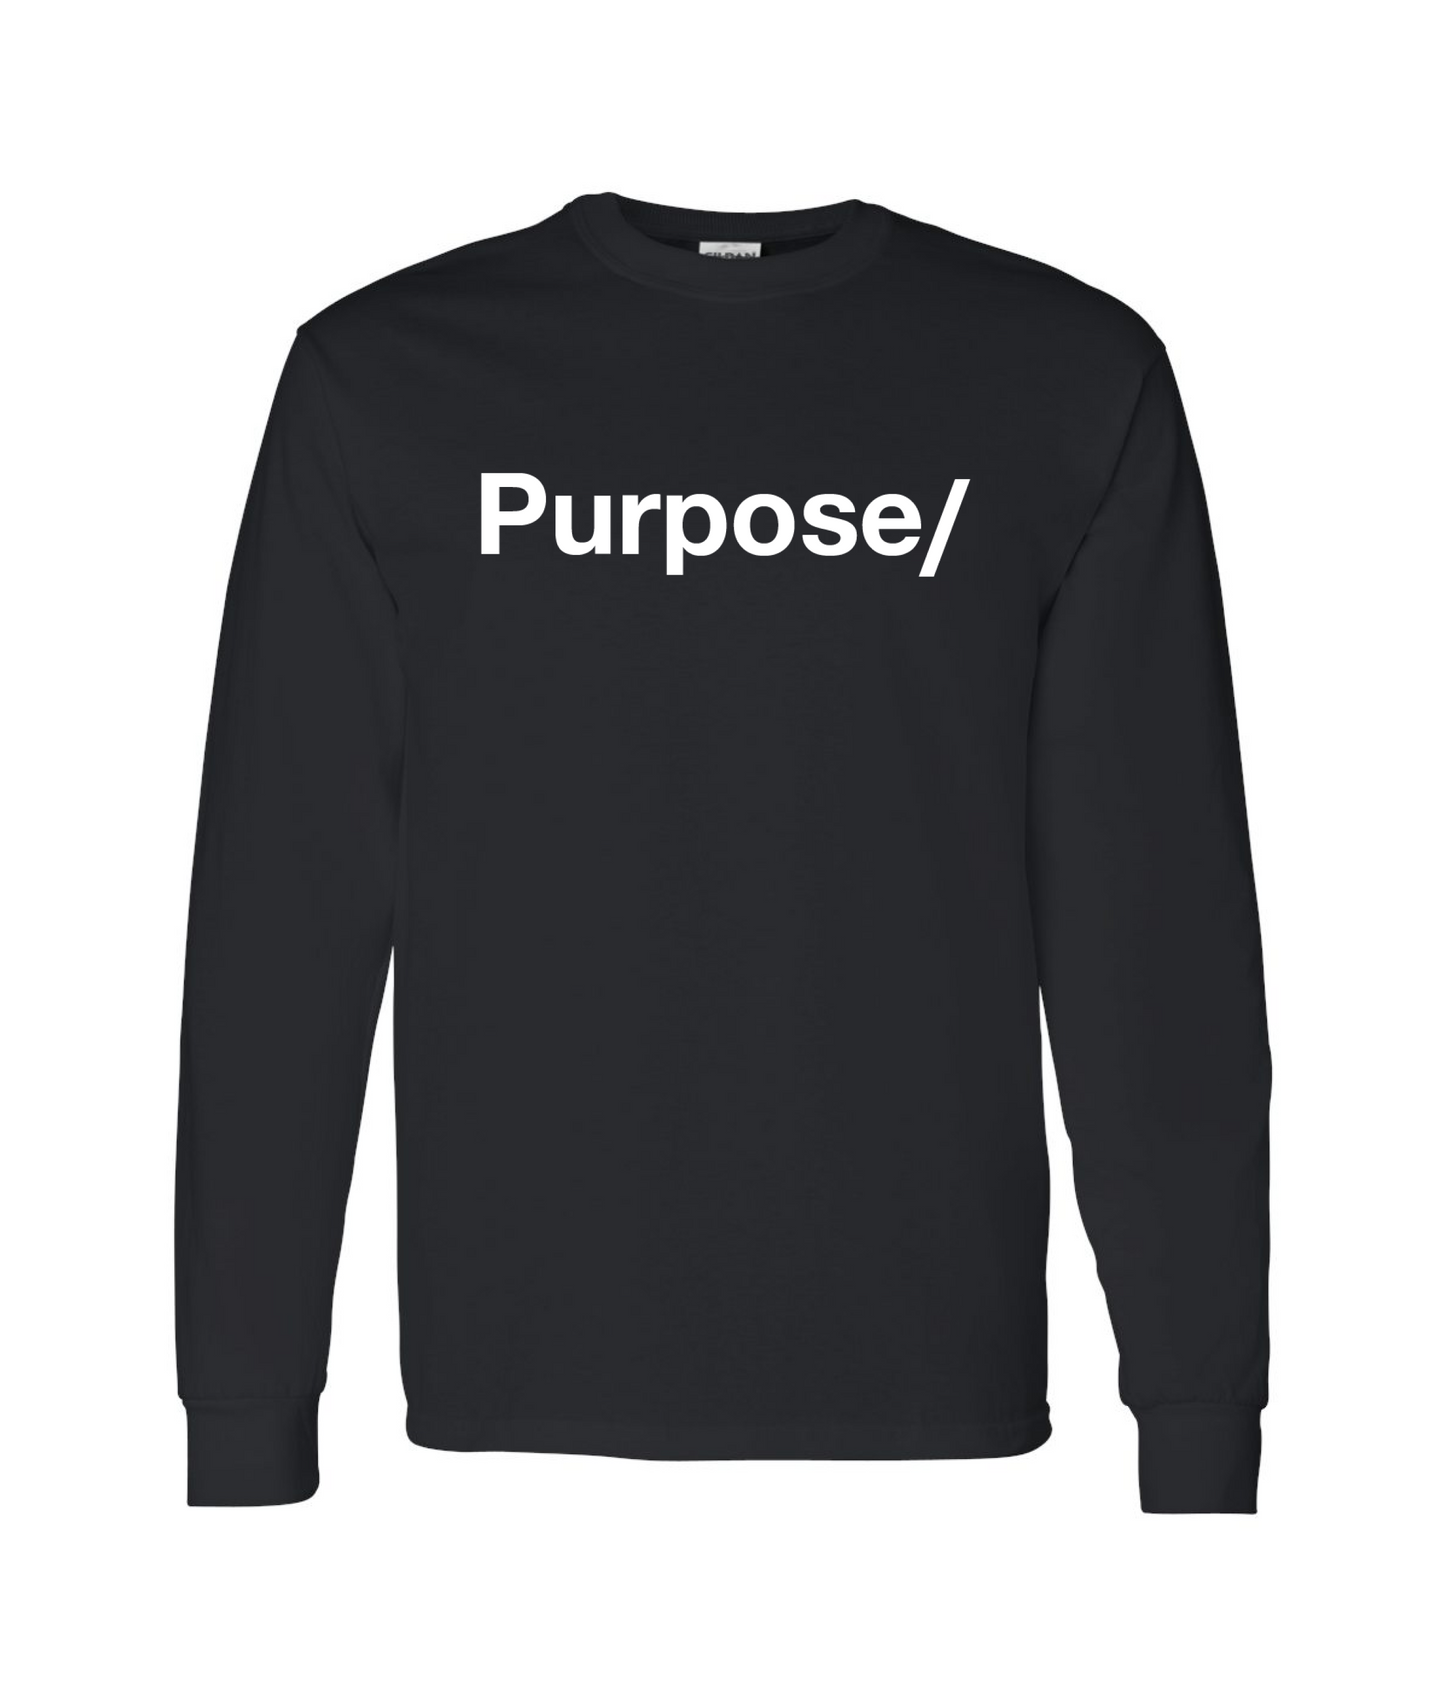 Purpose/ - Purpose/ - Black Long Sleeve T